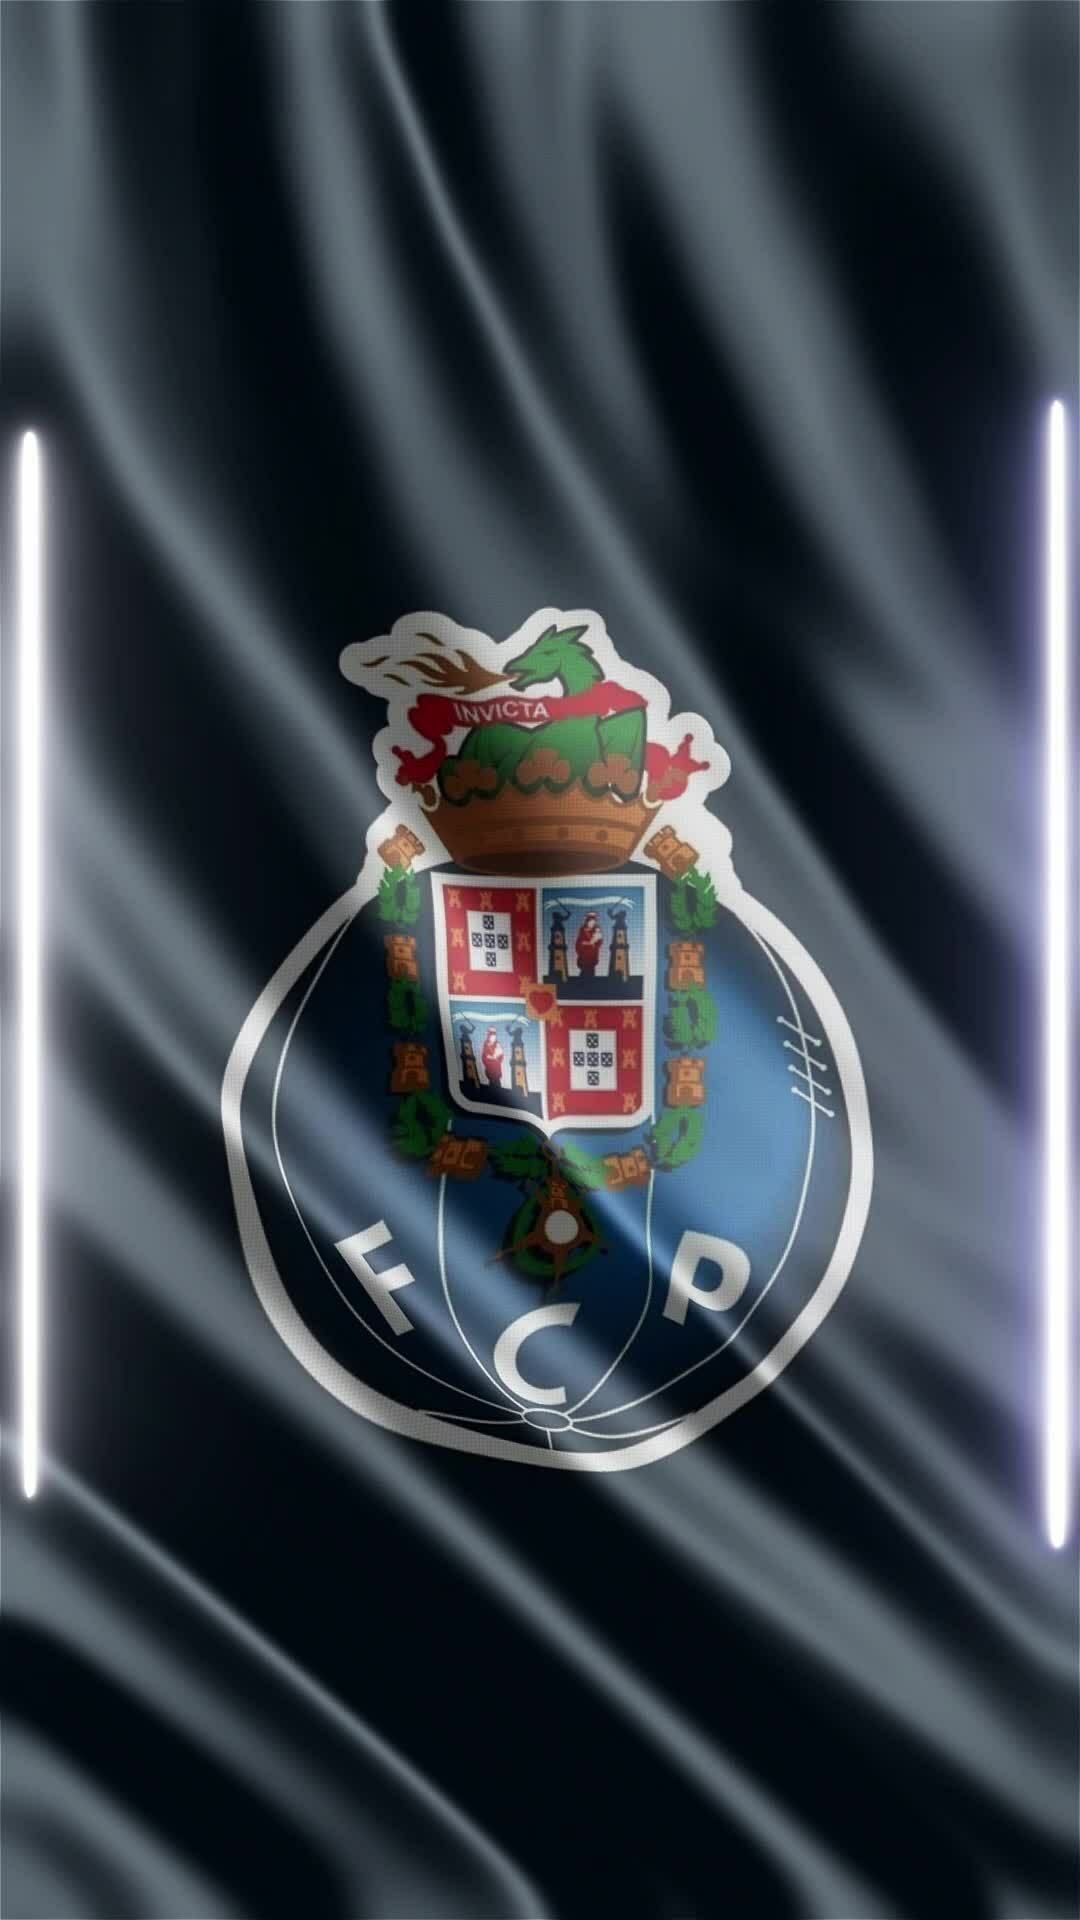 FCP Logo I editorial stock photo. Image of porto, interior - 137356718